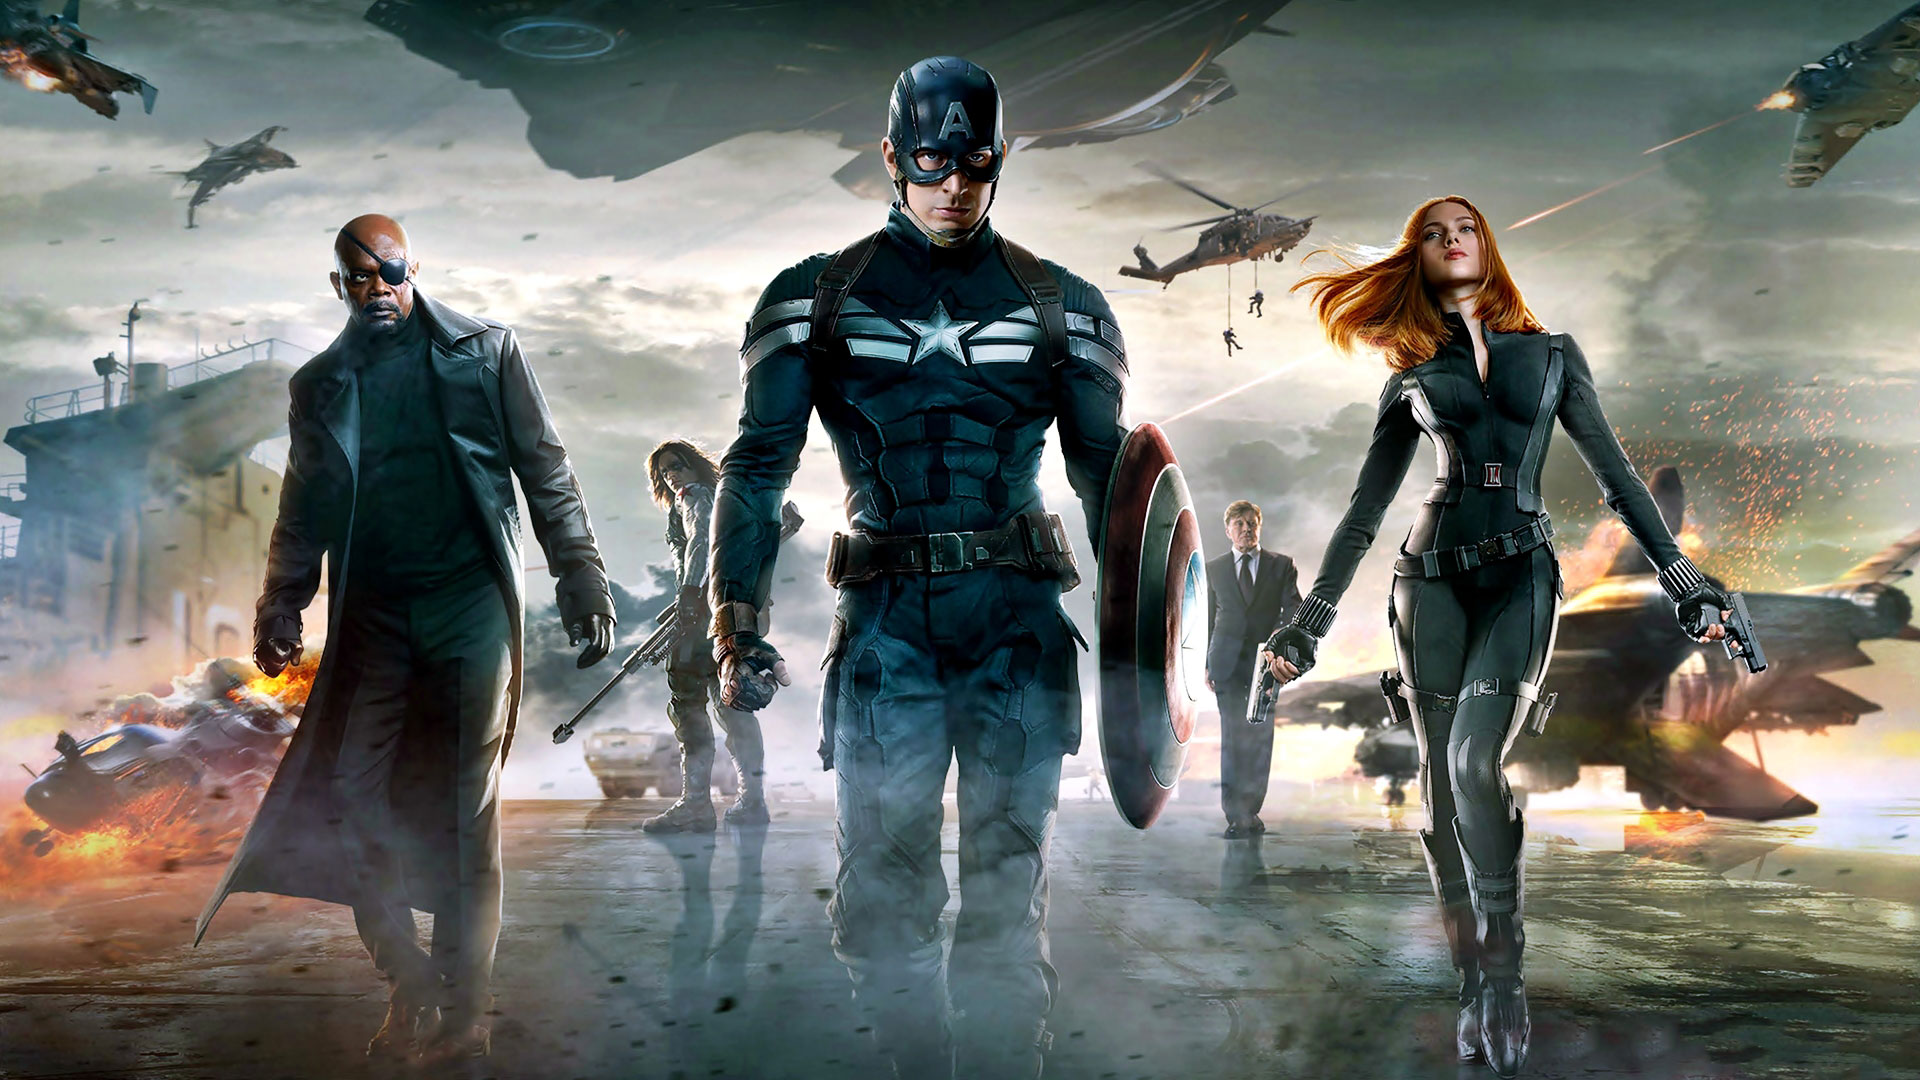 https://vignette.wikia.nocookie.net/lookout/images/2/28/Captain-America-The-Winter-Soldier-2014-Poster-Wallpaper.jpg/revision/latest?cb=20140725215919&format=original